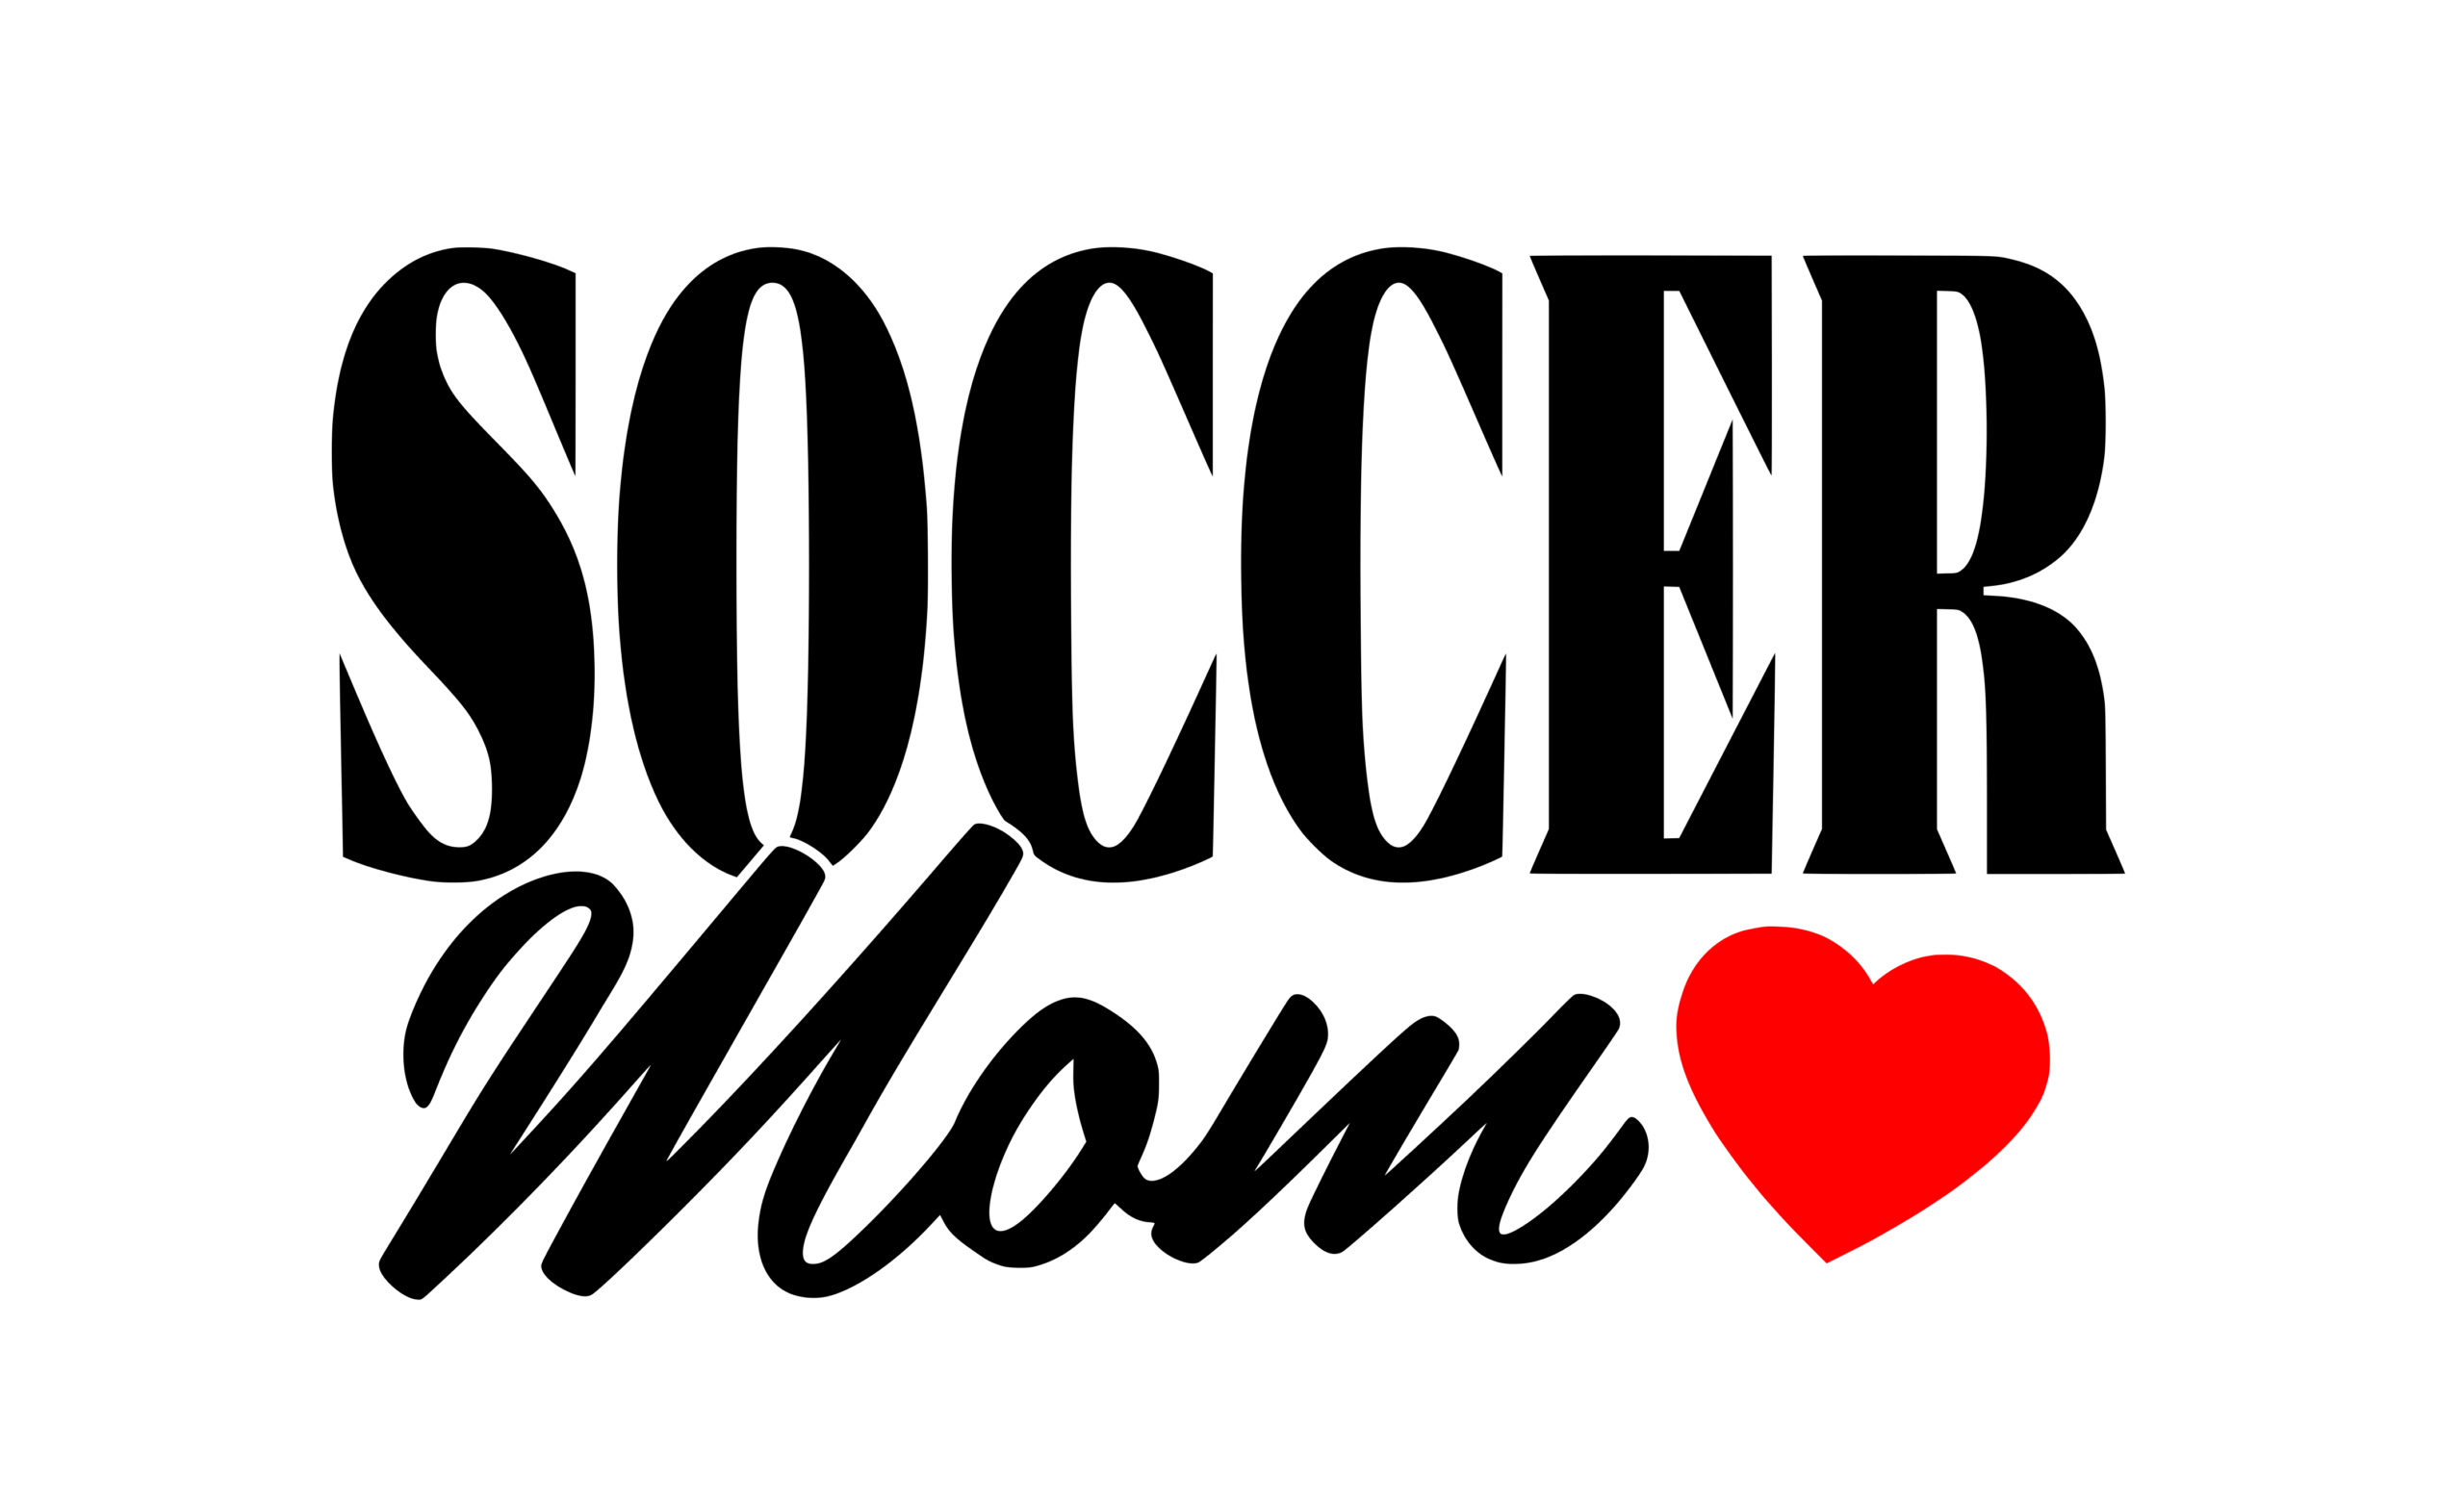 Free Soccer MoM SVG Cutting File